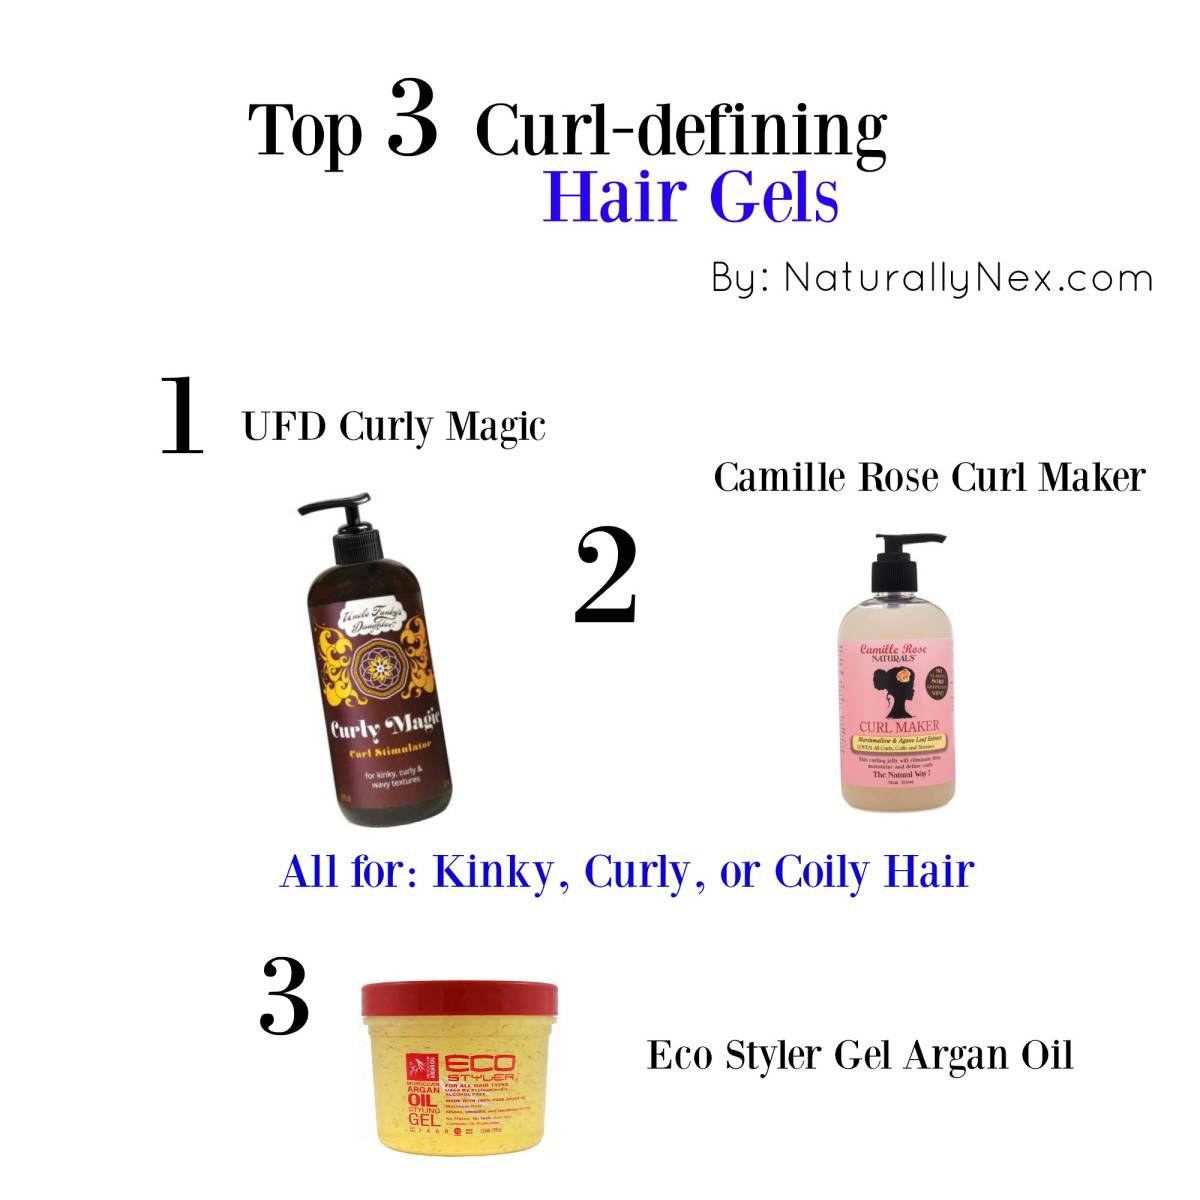 Top 3 curl-defining hair gels for wash n go